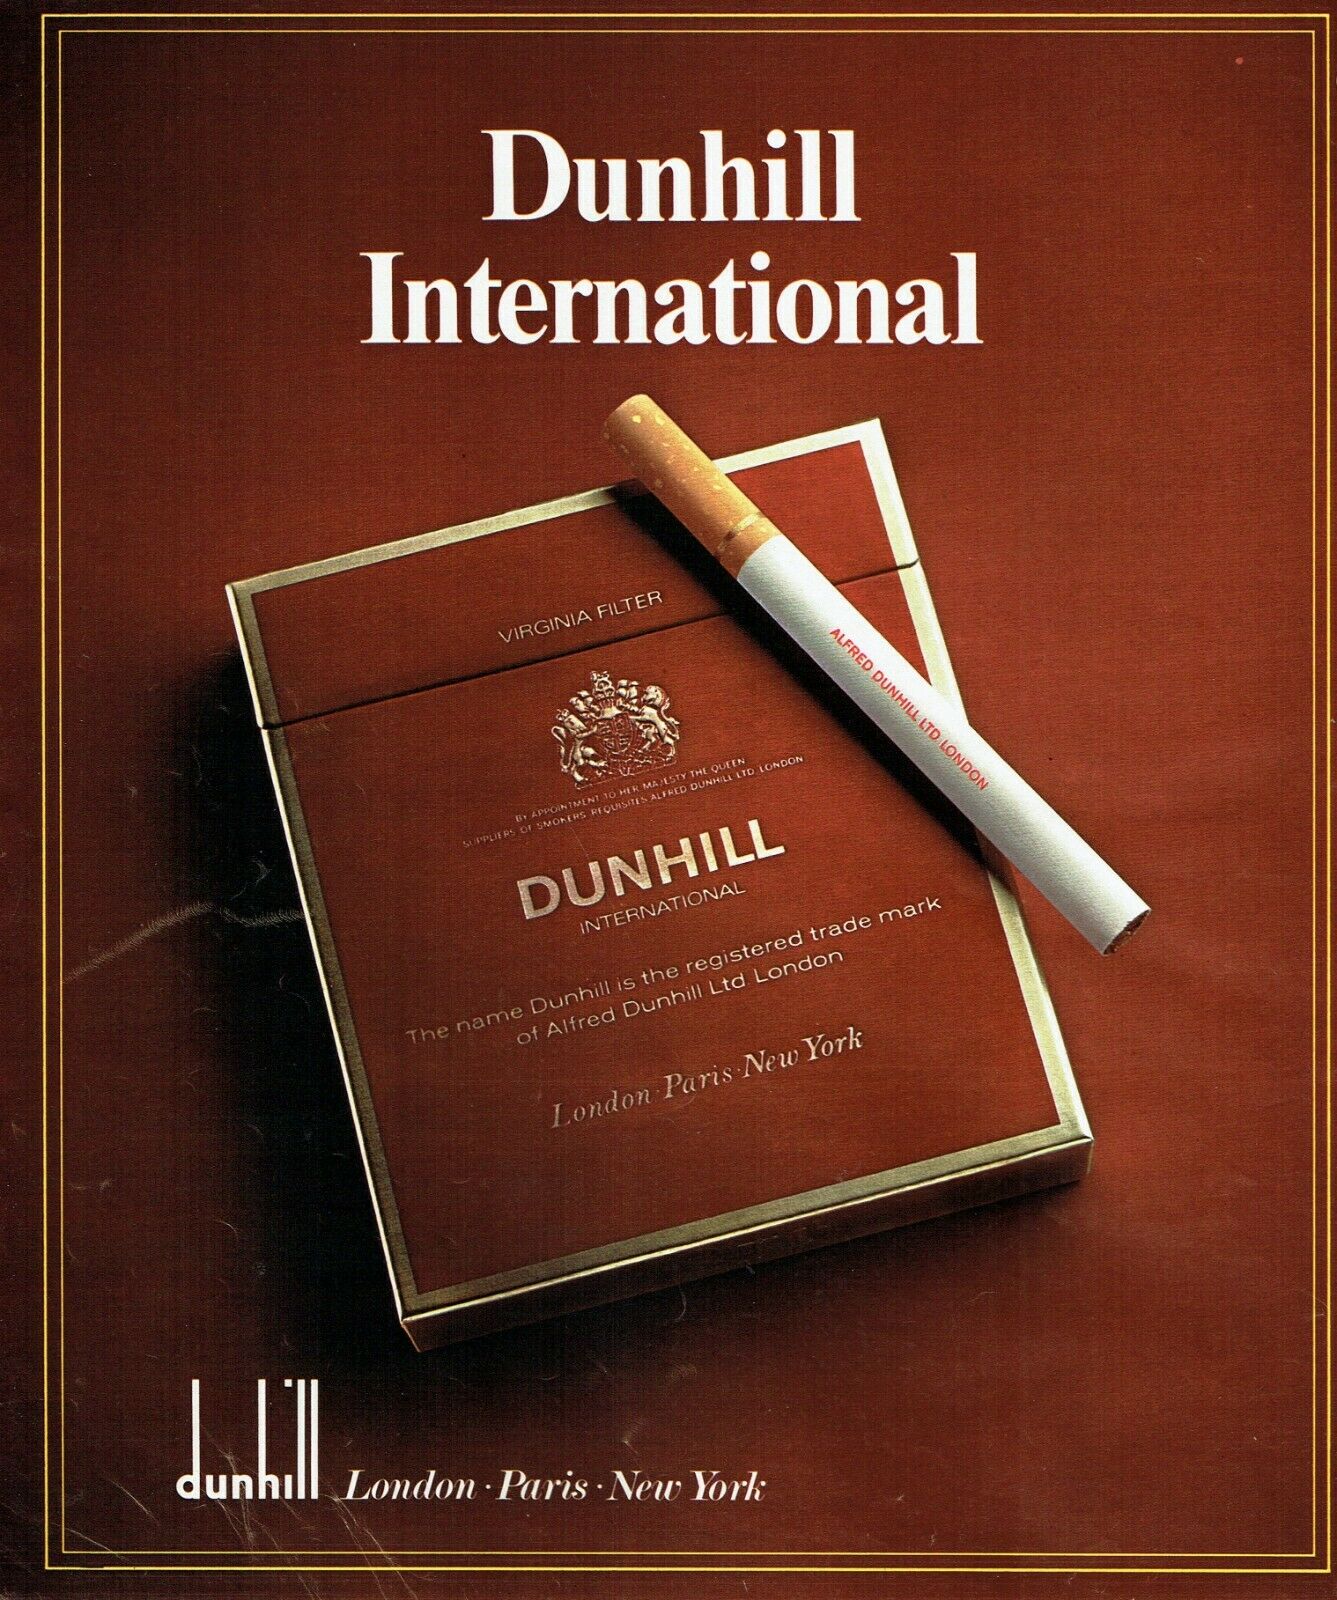 Цена int. Сигареты Данхилл International. Сигареты Dunhill International Black. Dunhill International Англия сигареты. Сигареты типа Данхилл.